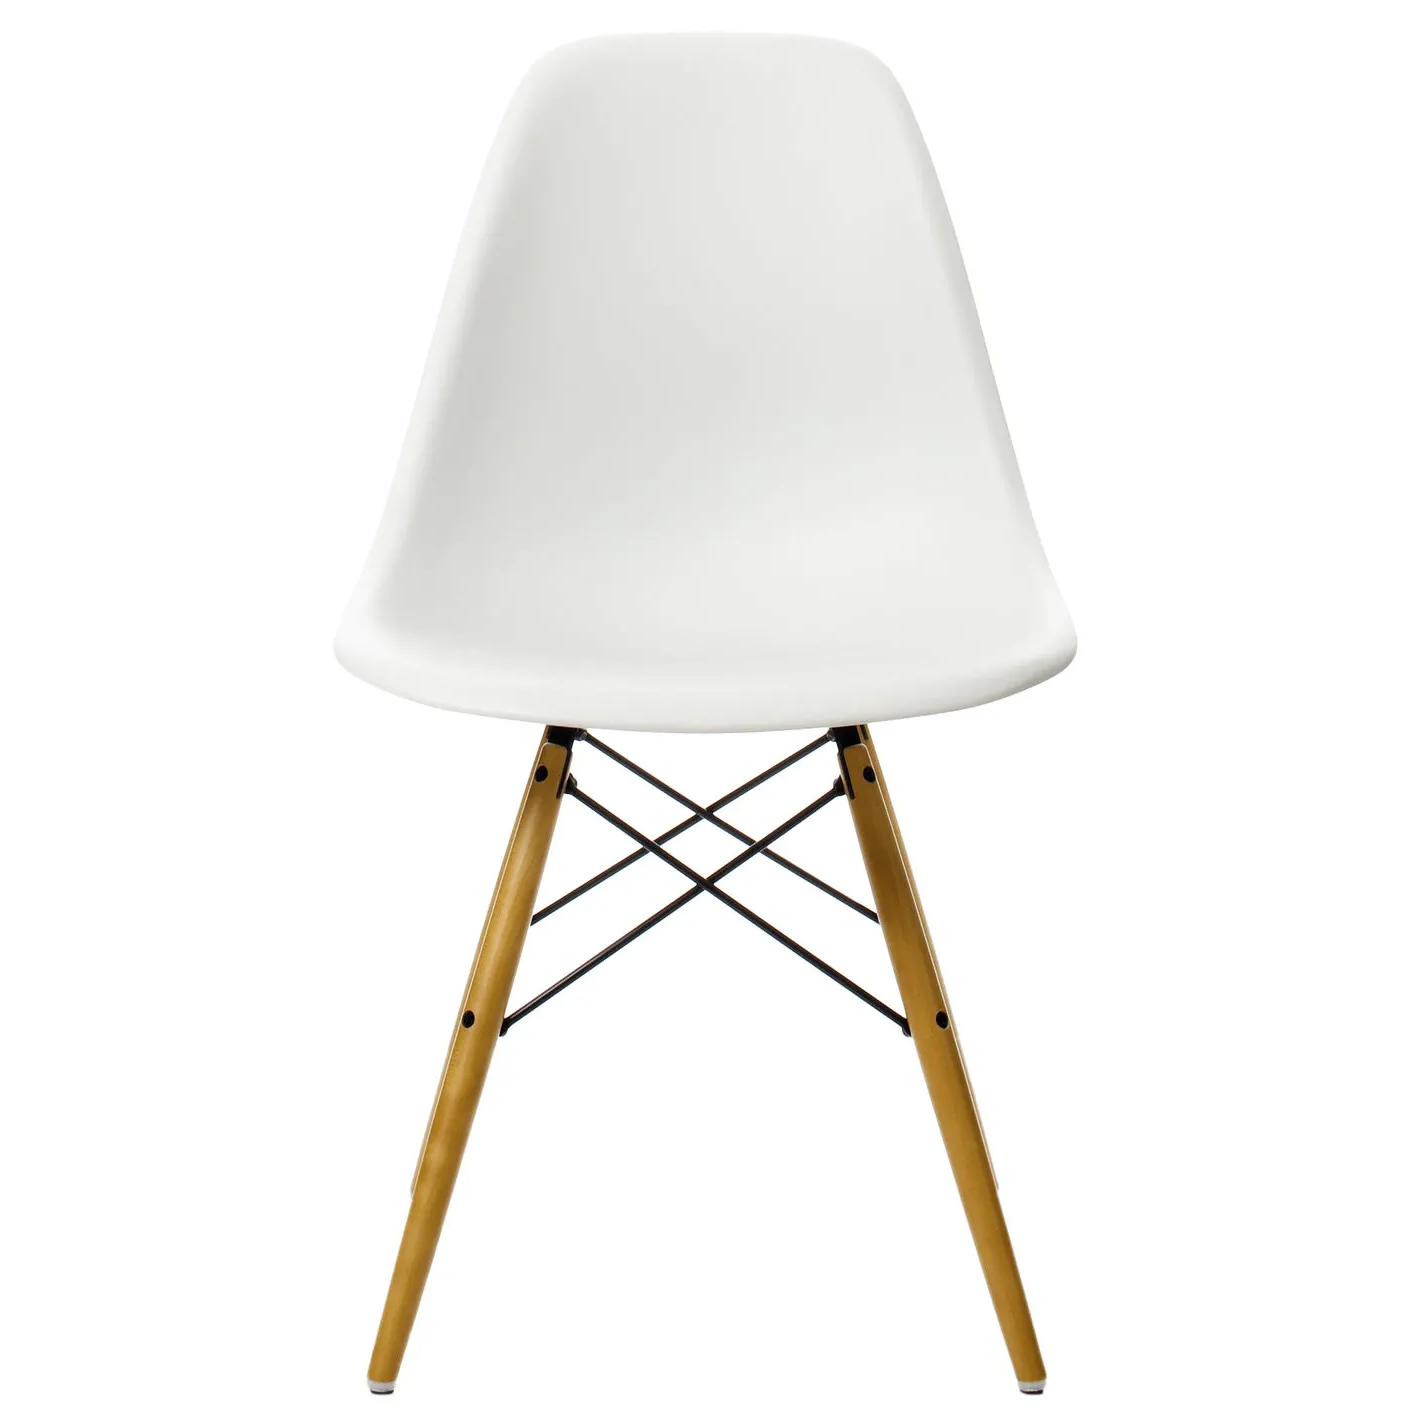 abces kool Kerstmis Vitra Eames Chair: zo kies je jouw kuipstoel – HelloChair